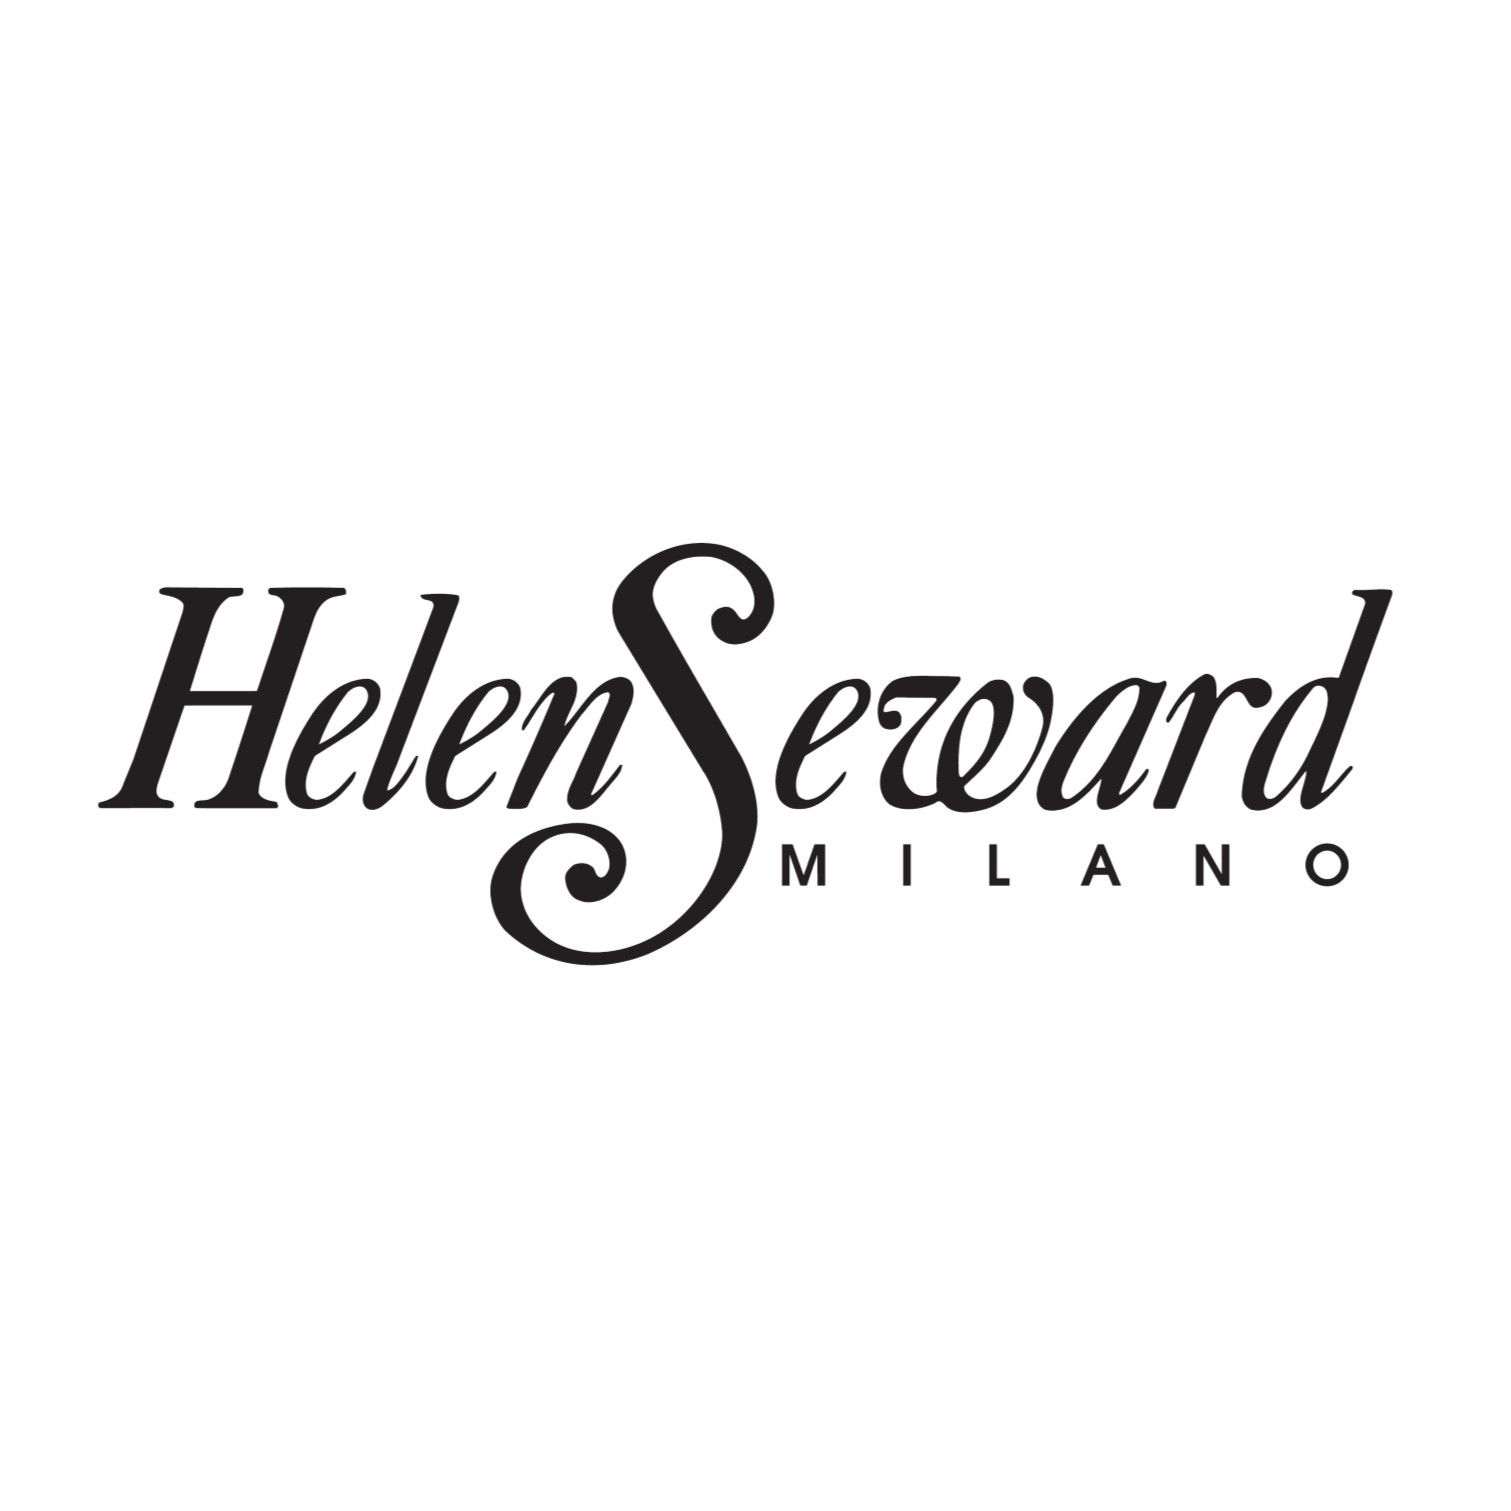 Helen seward